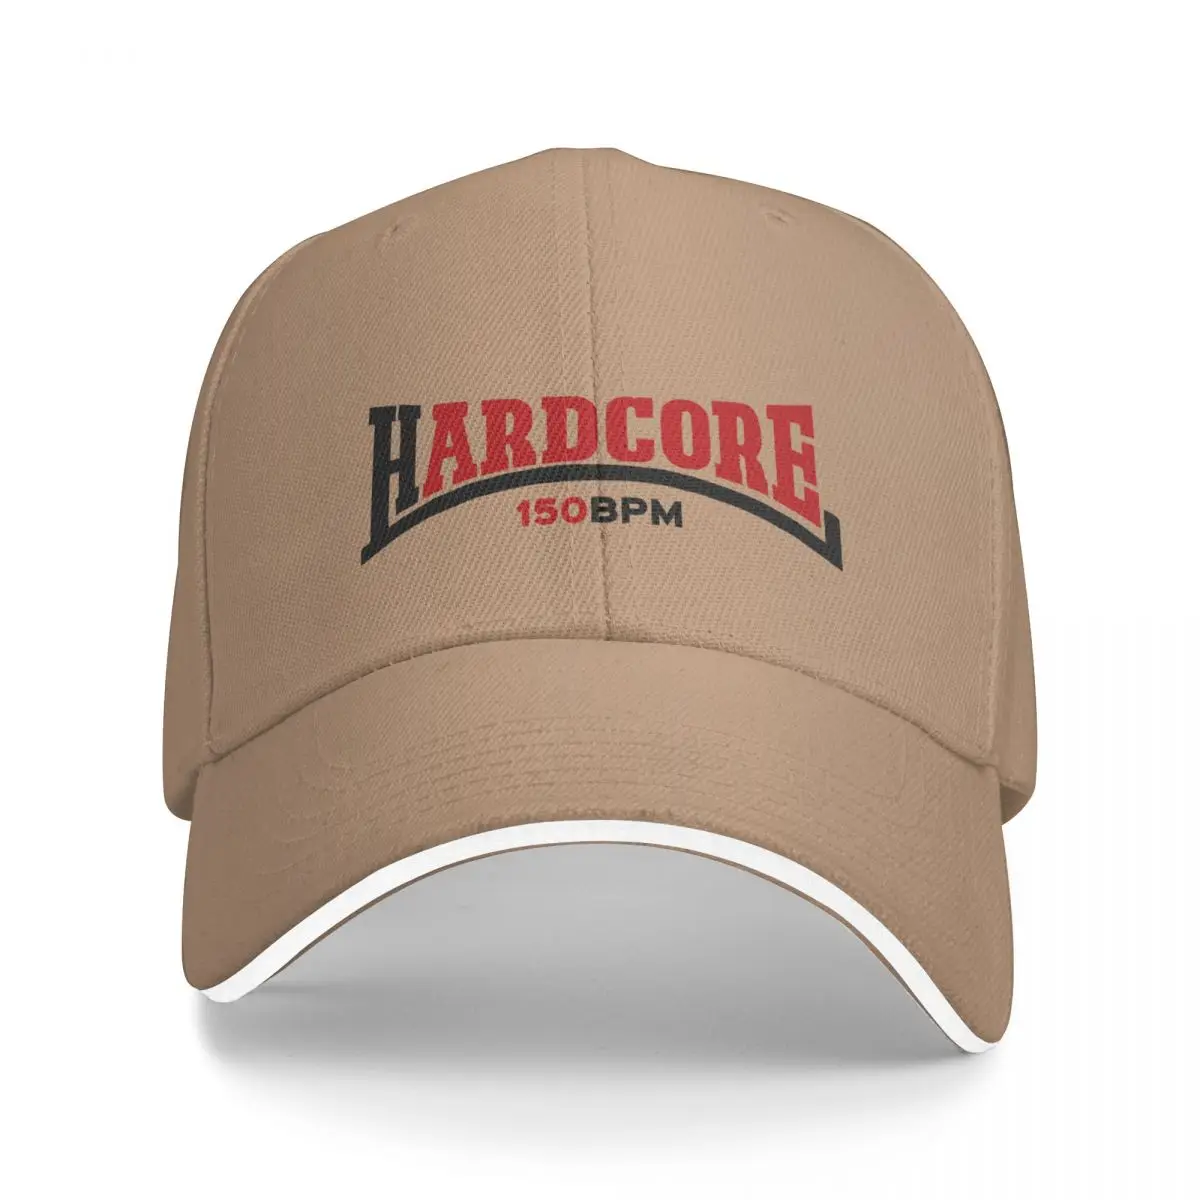 150 BPM Gabber Hardcore Music Cap Baseball Cap Hood new in hat designer hat  men hats Women's - AliExpress